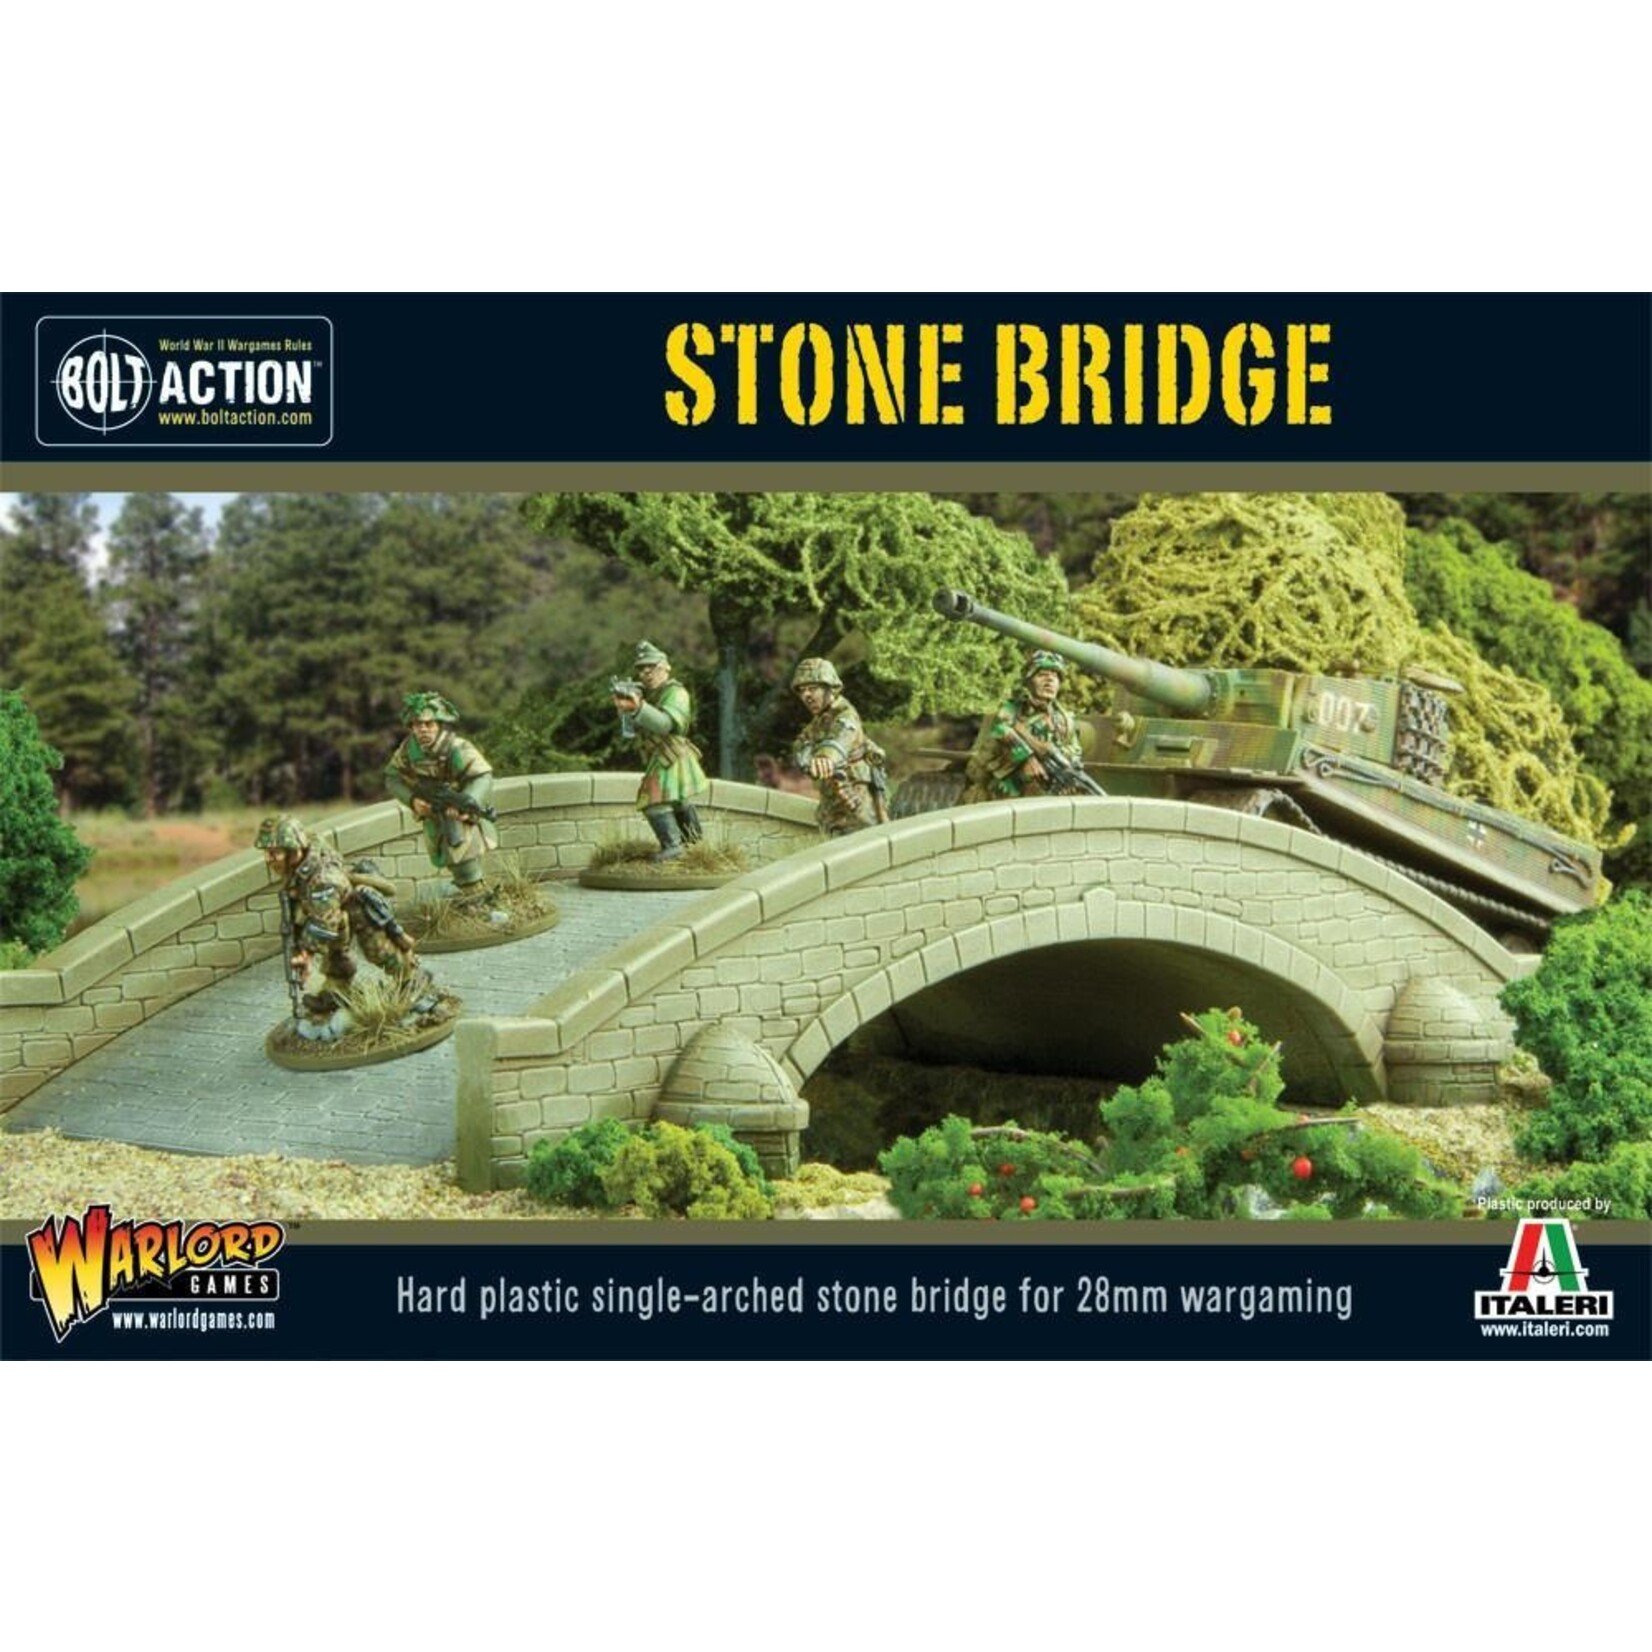 Stone bridge - Bolt action